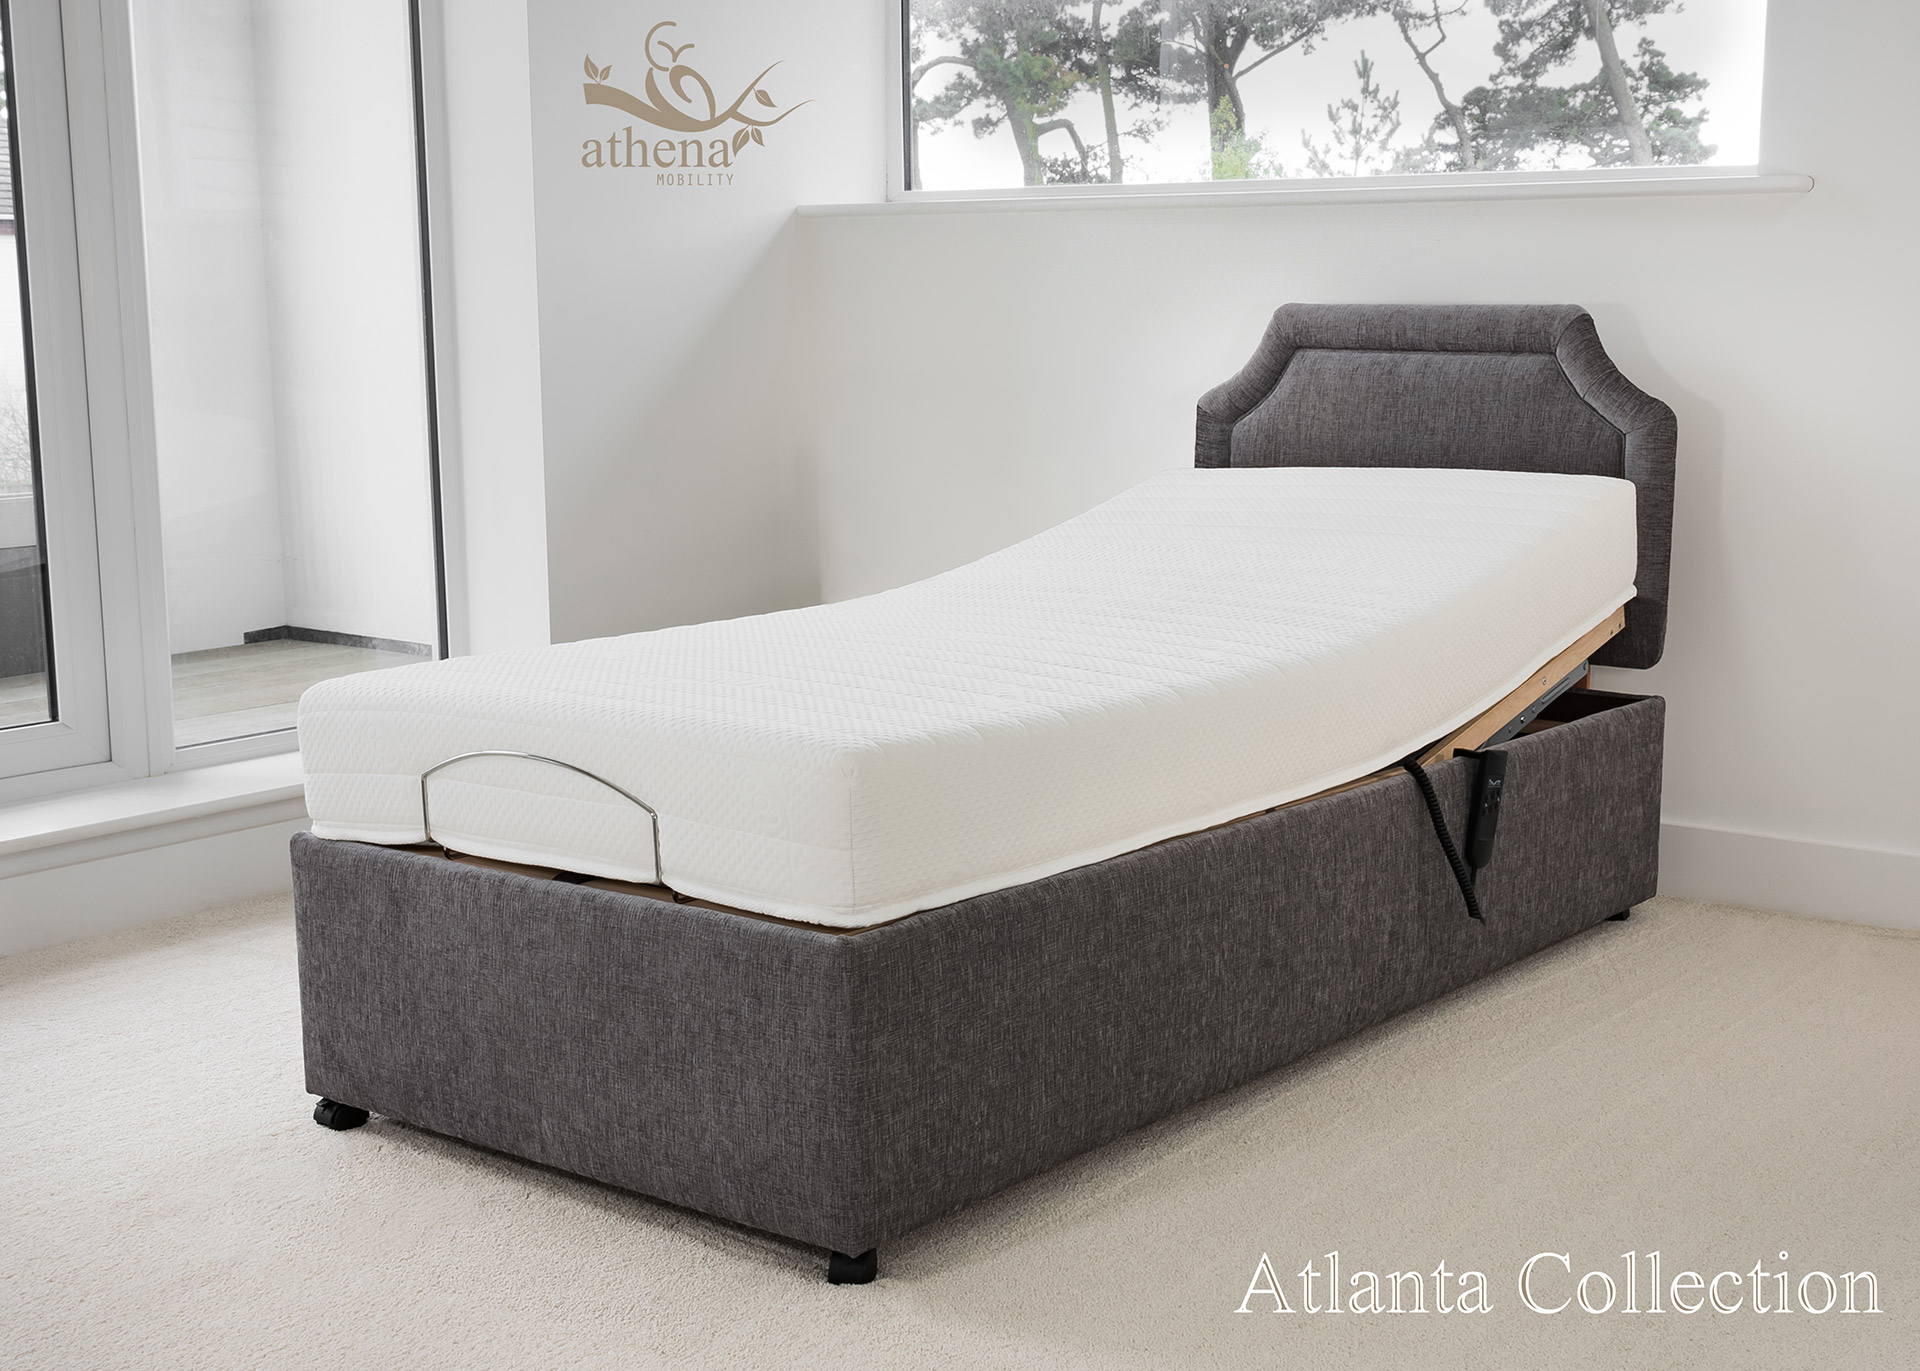 Athena Mobility | Atlanta Bed Collection